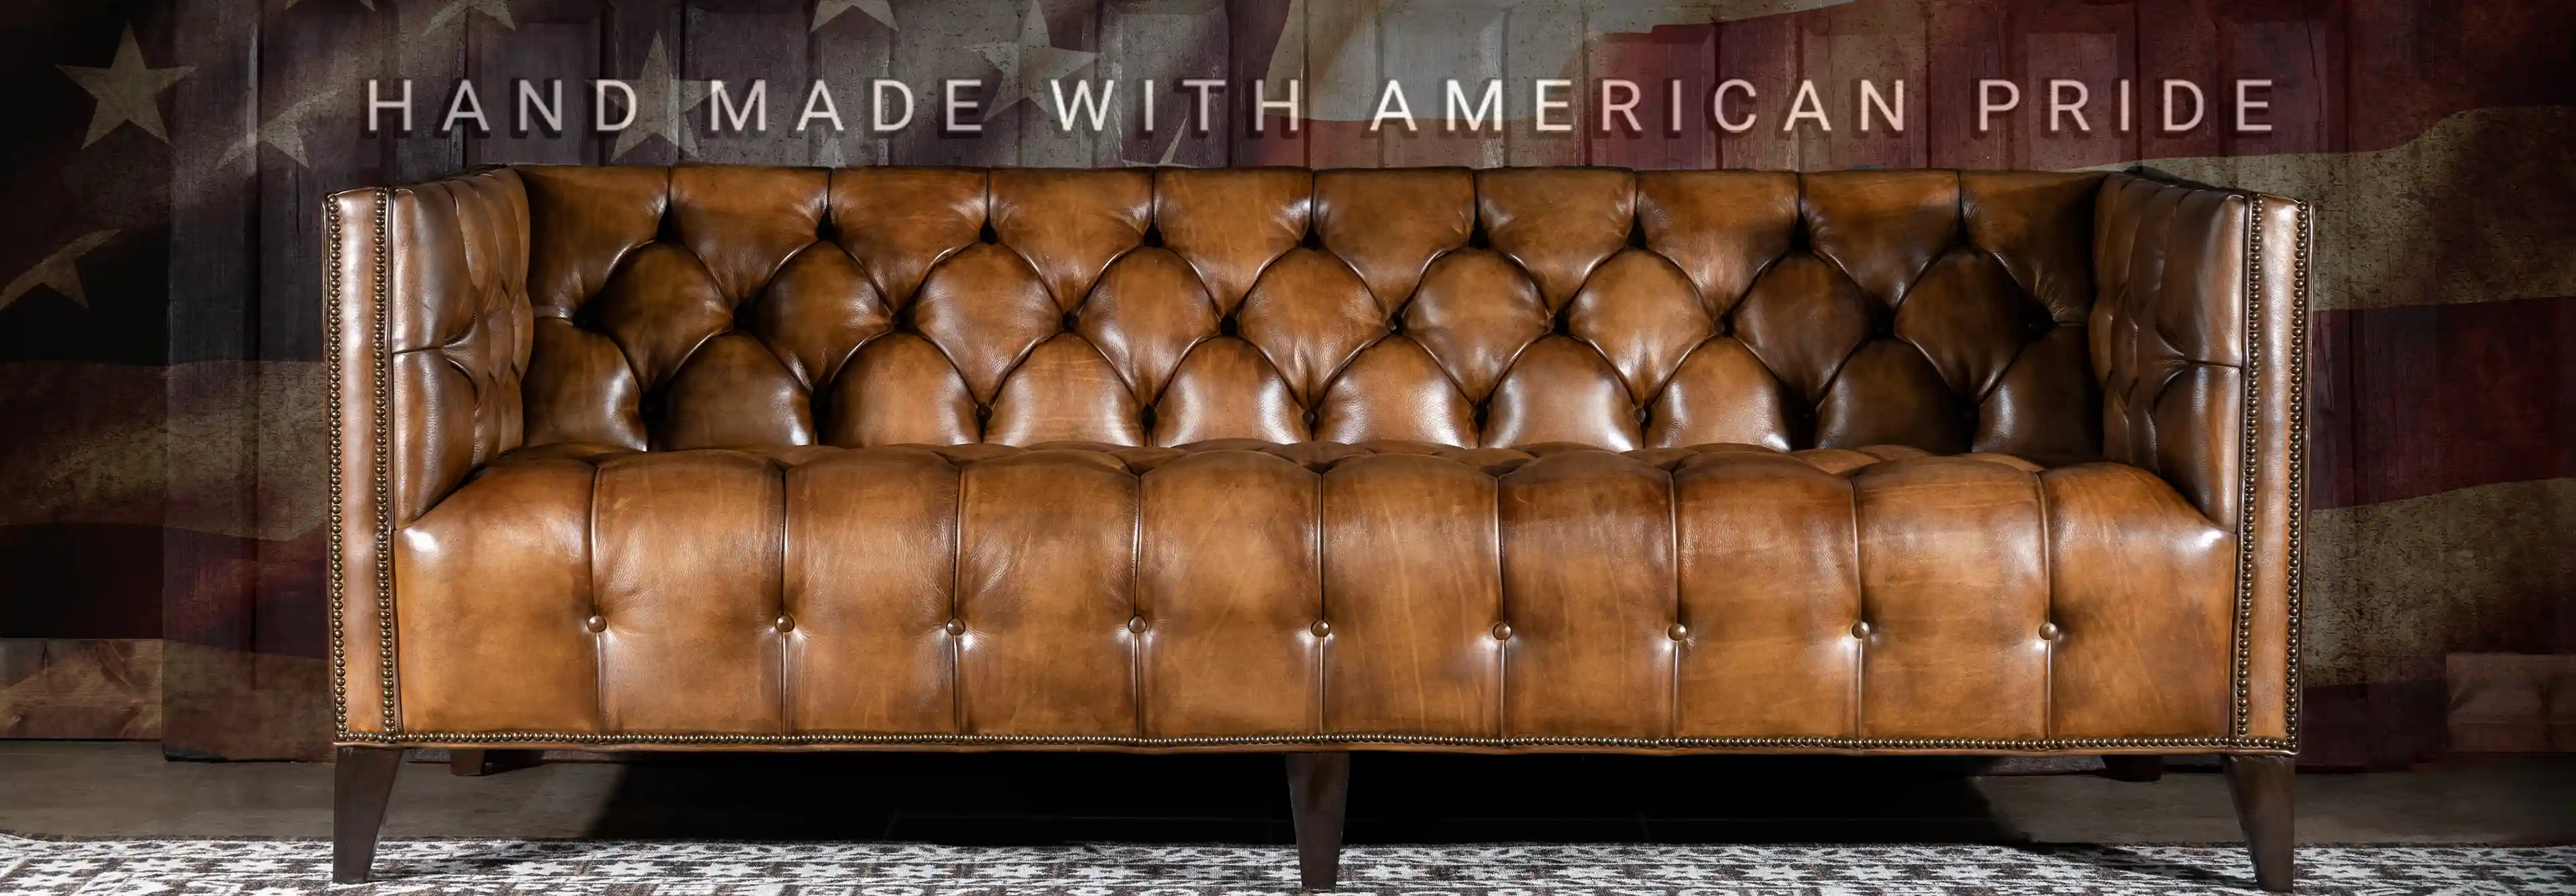 Adobe Interiors Furniture Best Leather Furniture Store In Texas